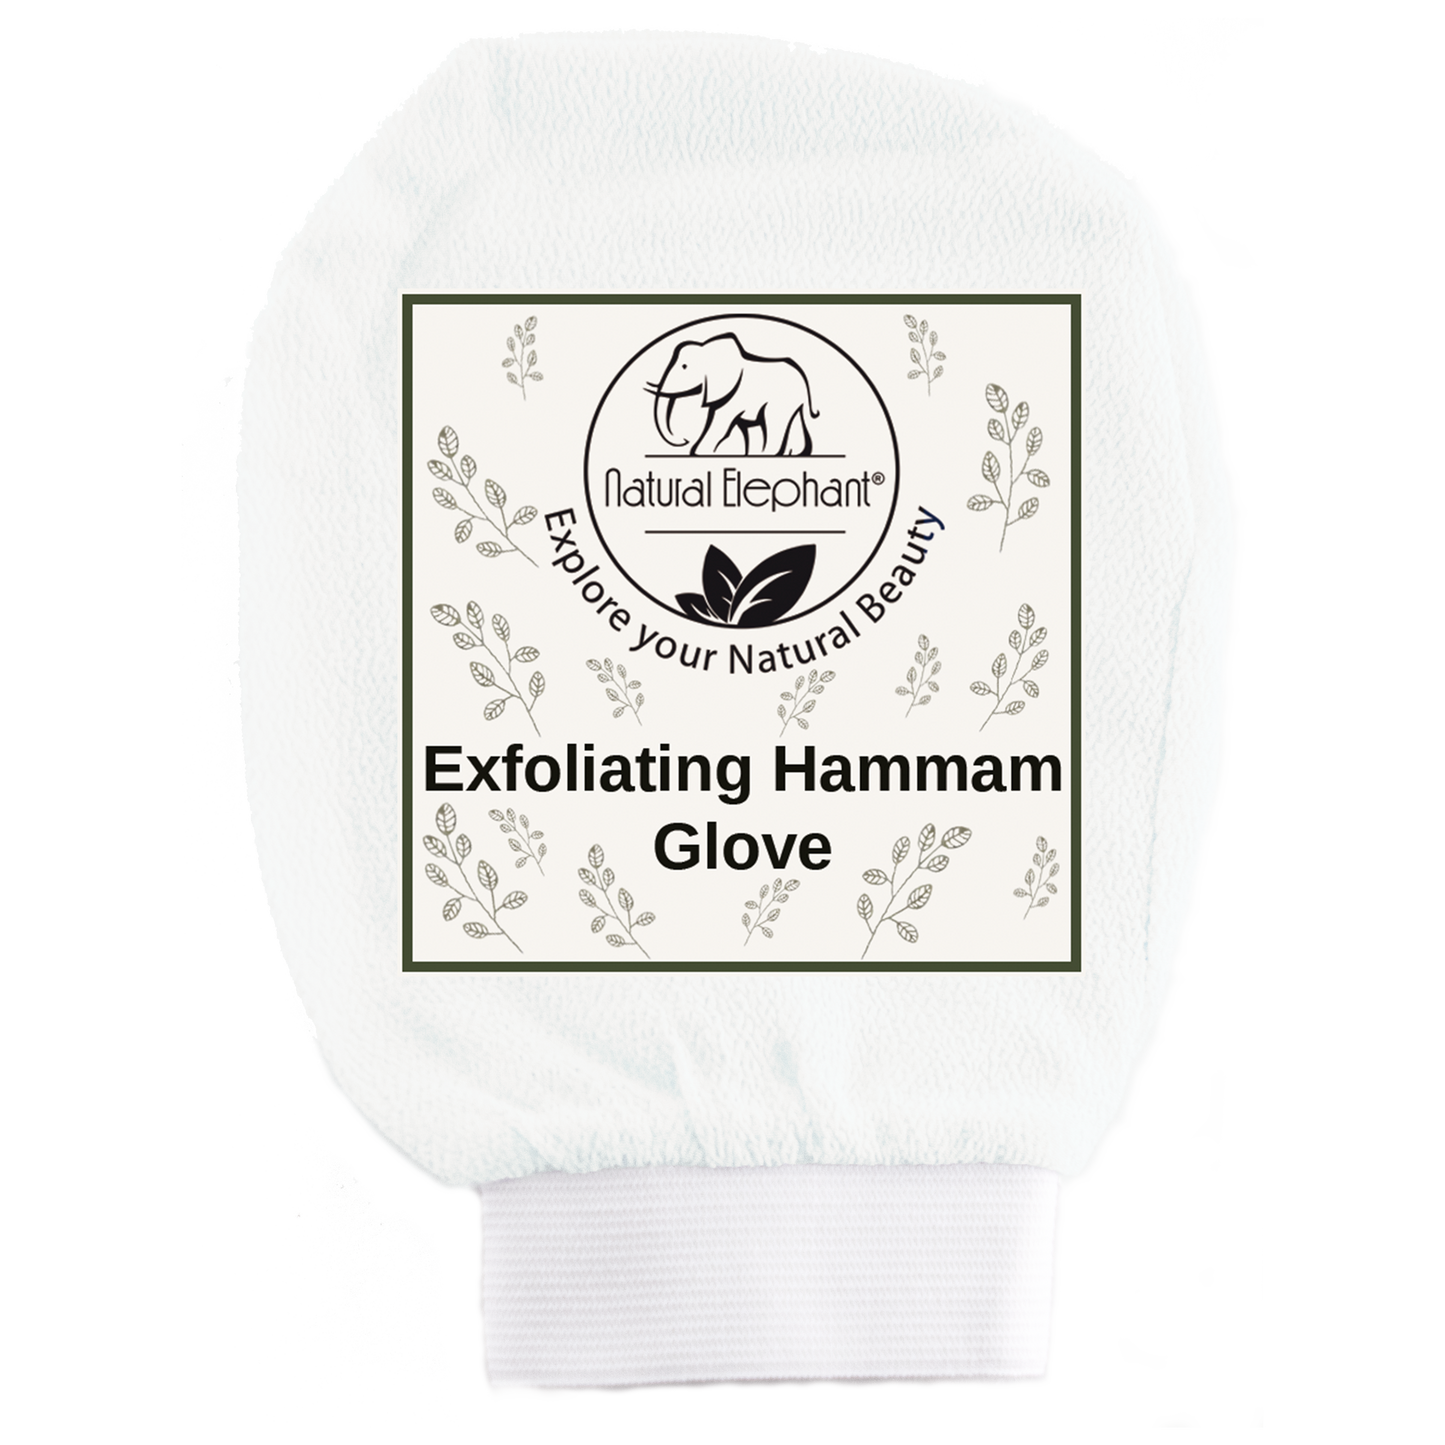 Exfoliating Hammam Glove